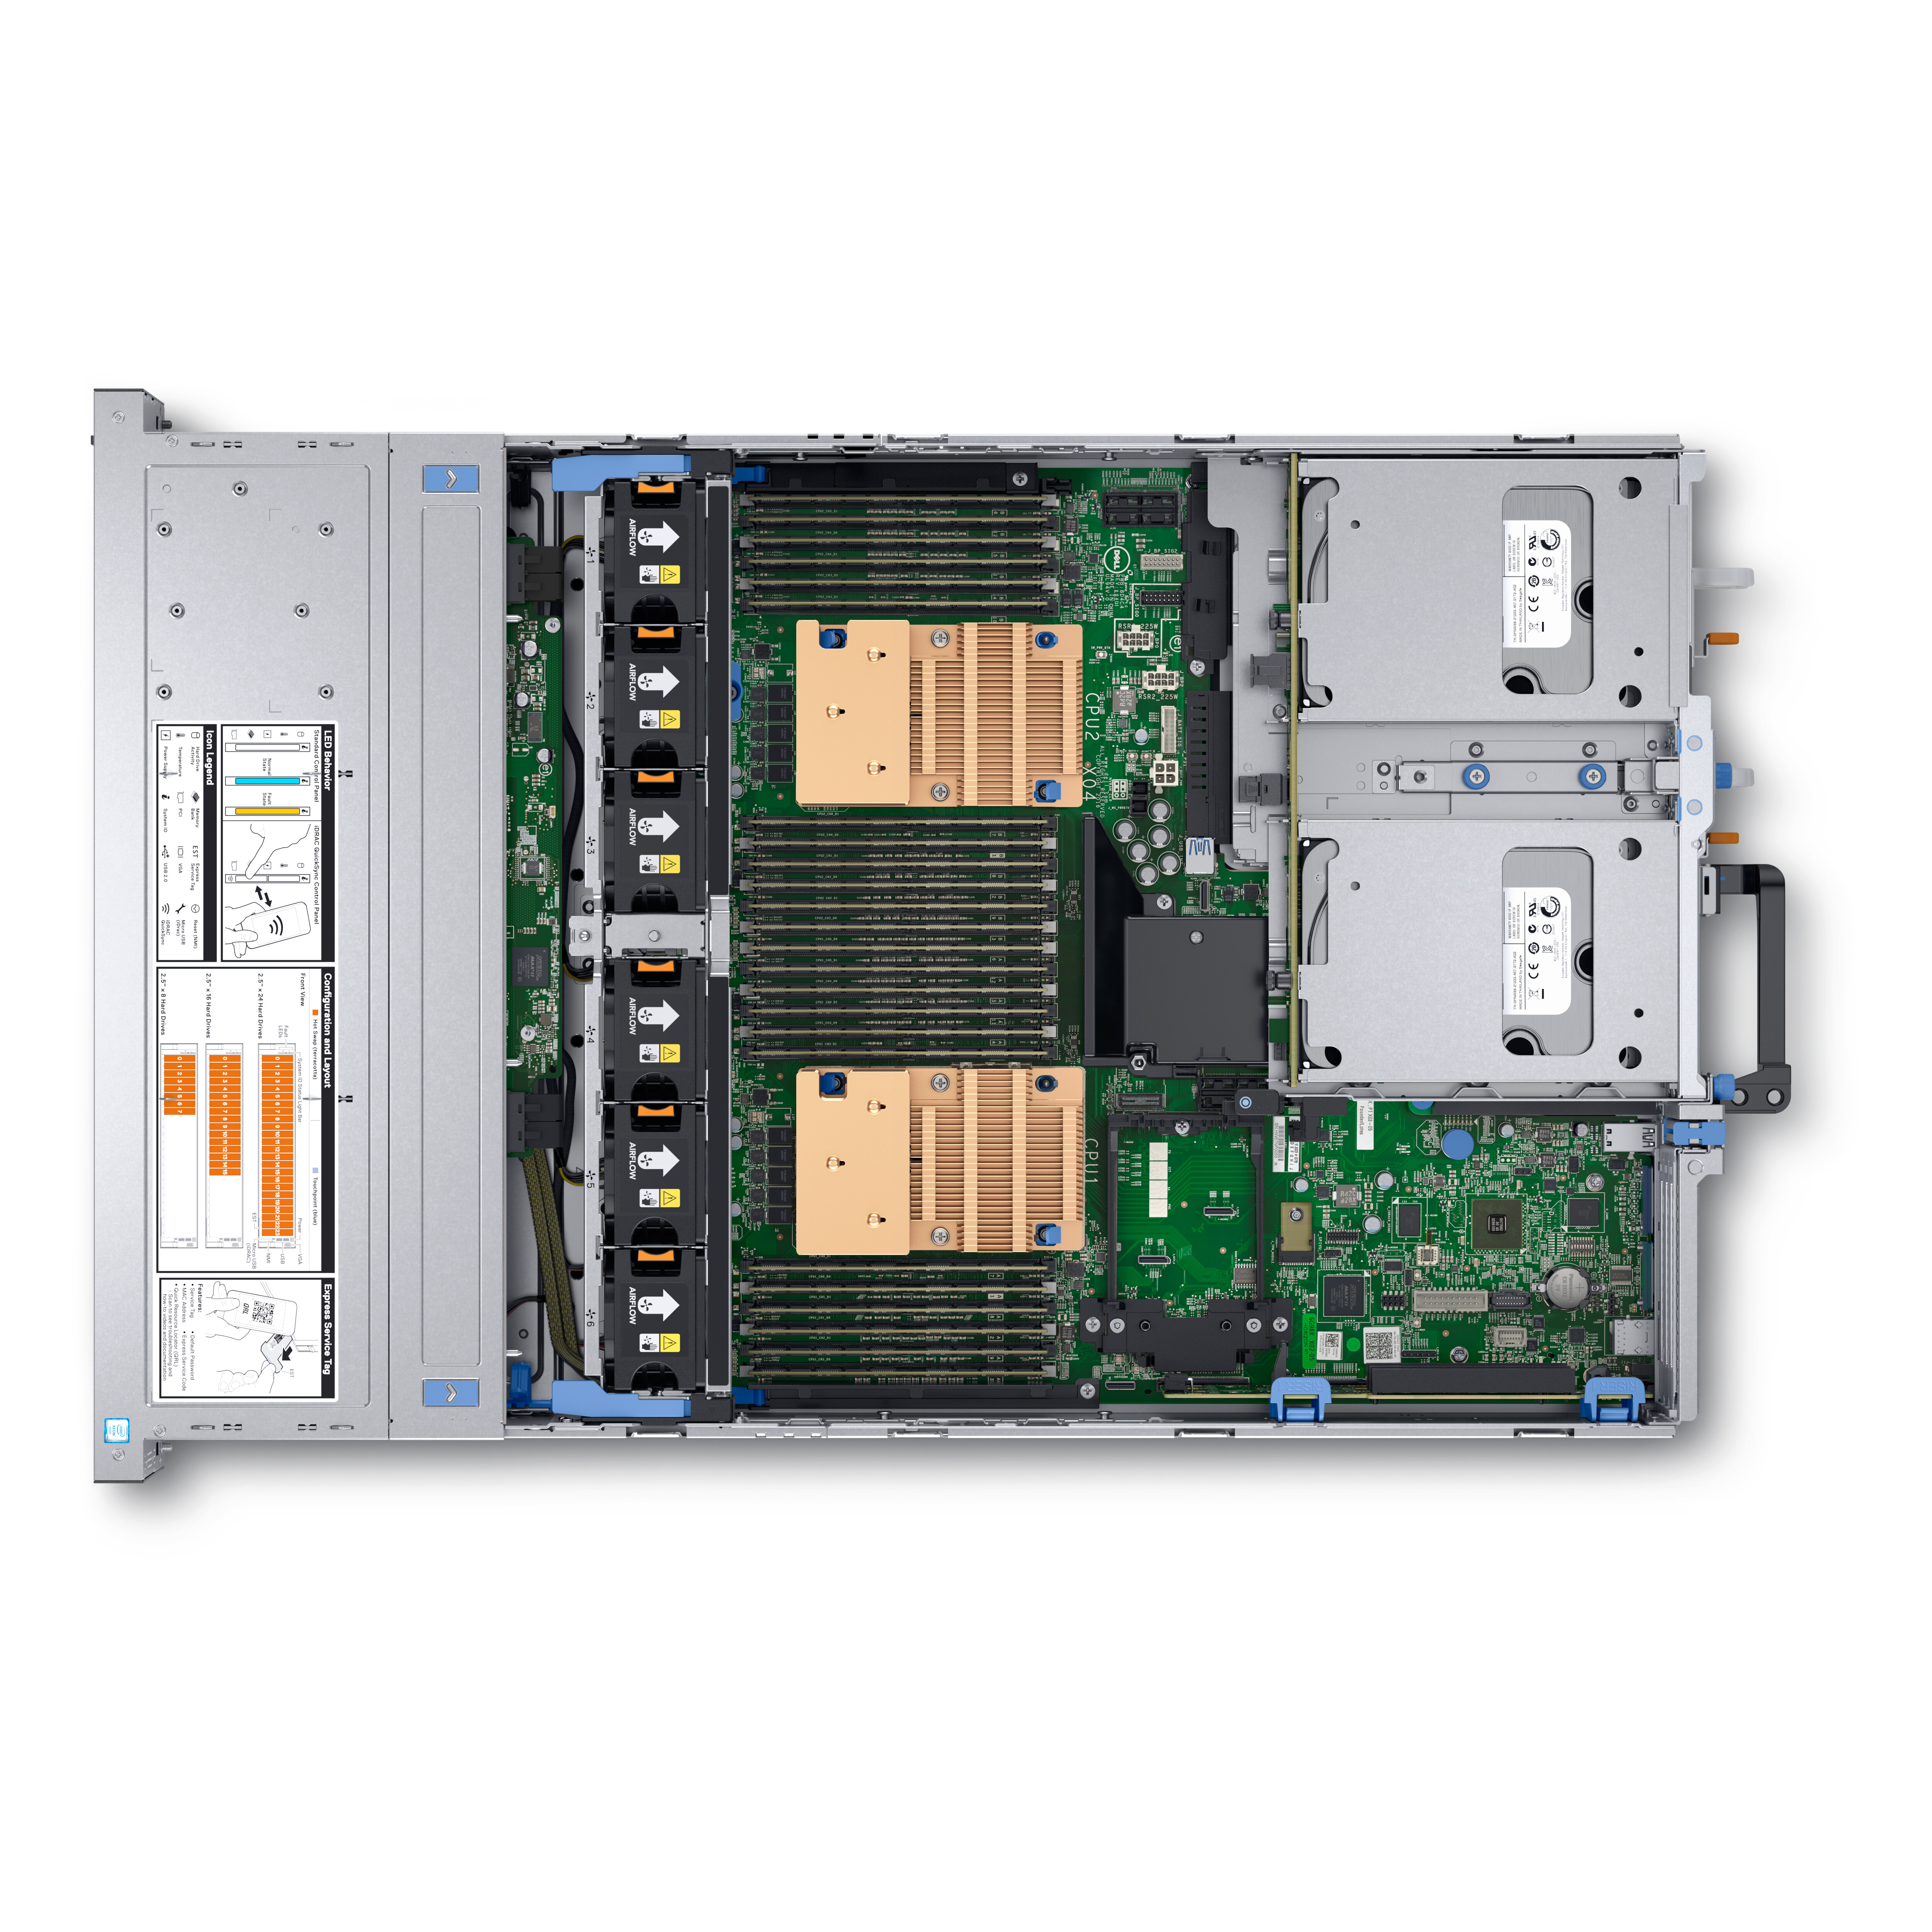 PowerEdge R740xd Rack Server